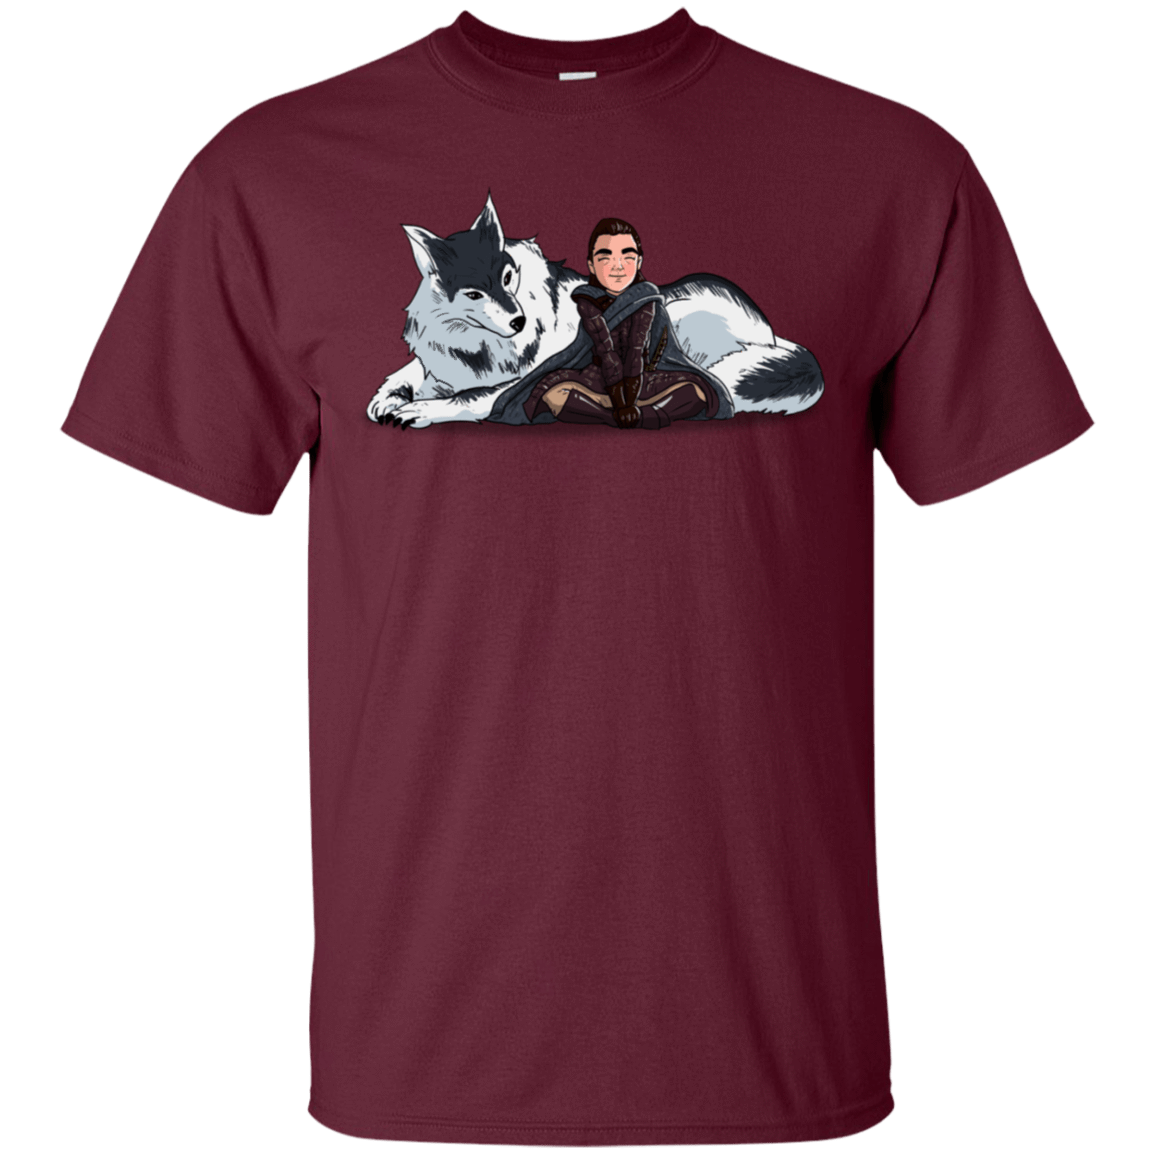 T-Shirts Maroon / S Arya and Nymeria T-Shirt